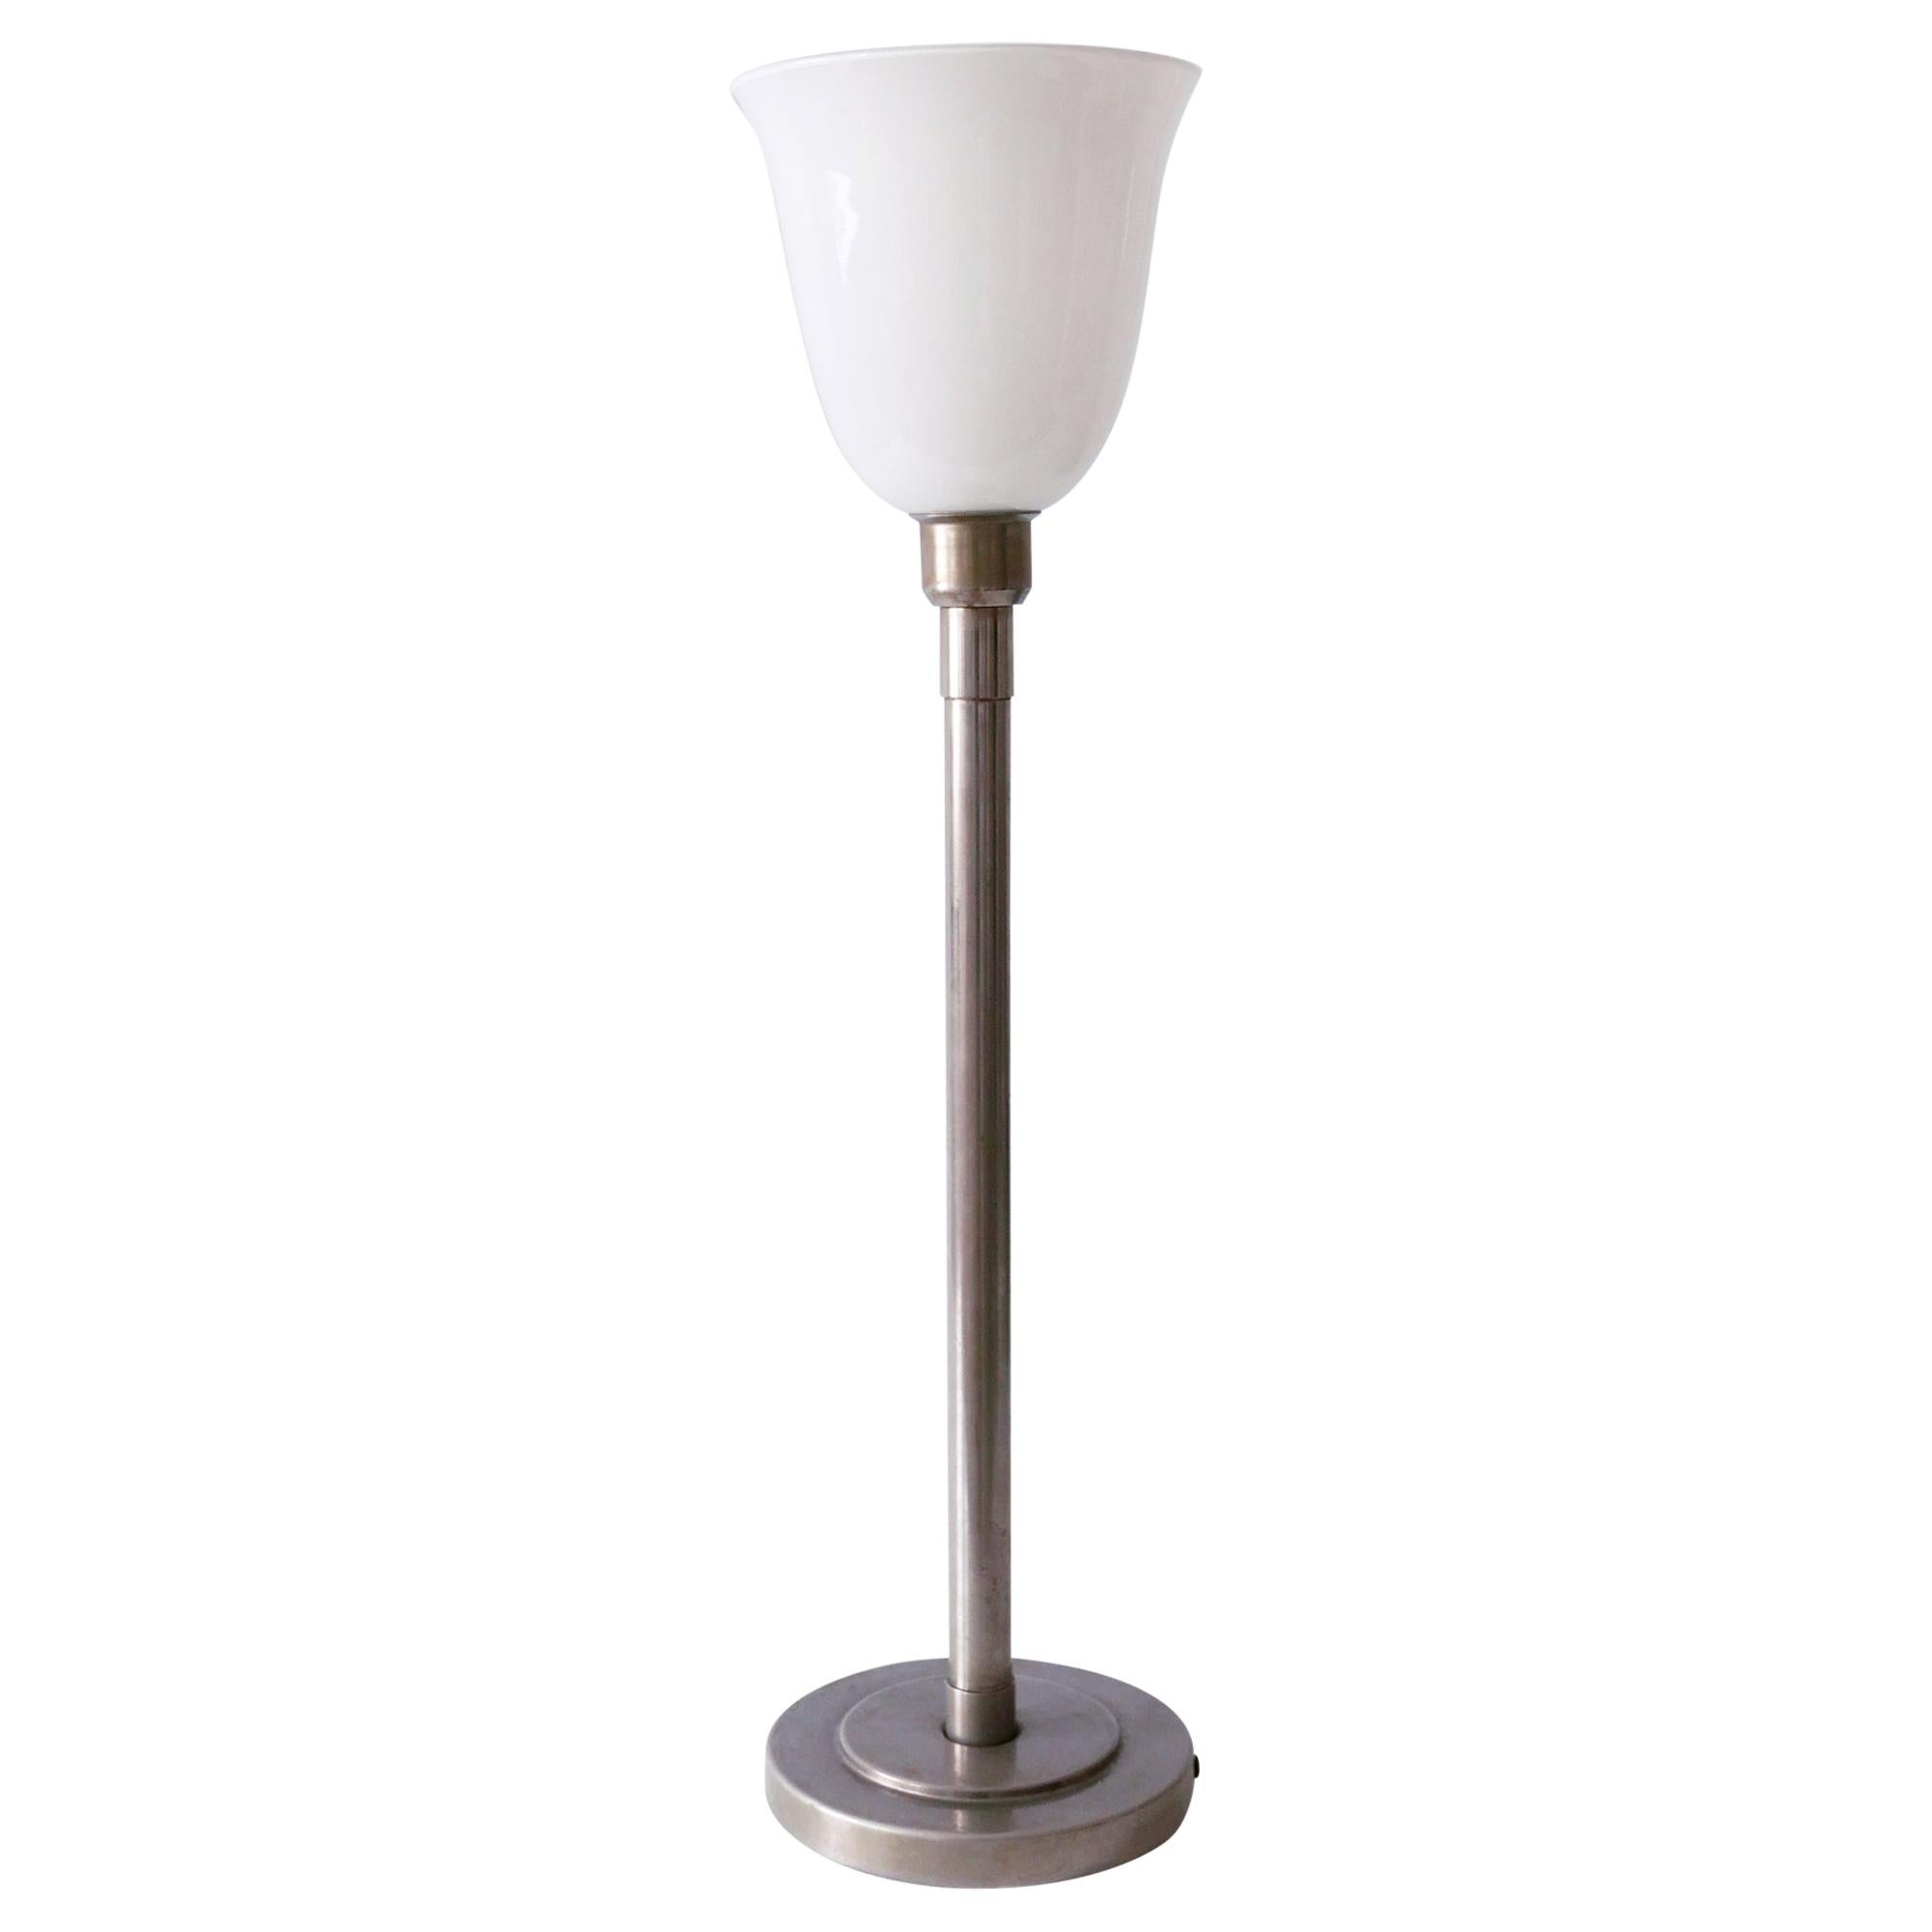 Elegant Art Deco Bauhaus Nickel-Plated Brass Table Lamp or Floor Light, 1930s For Sale